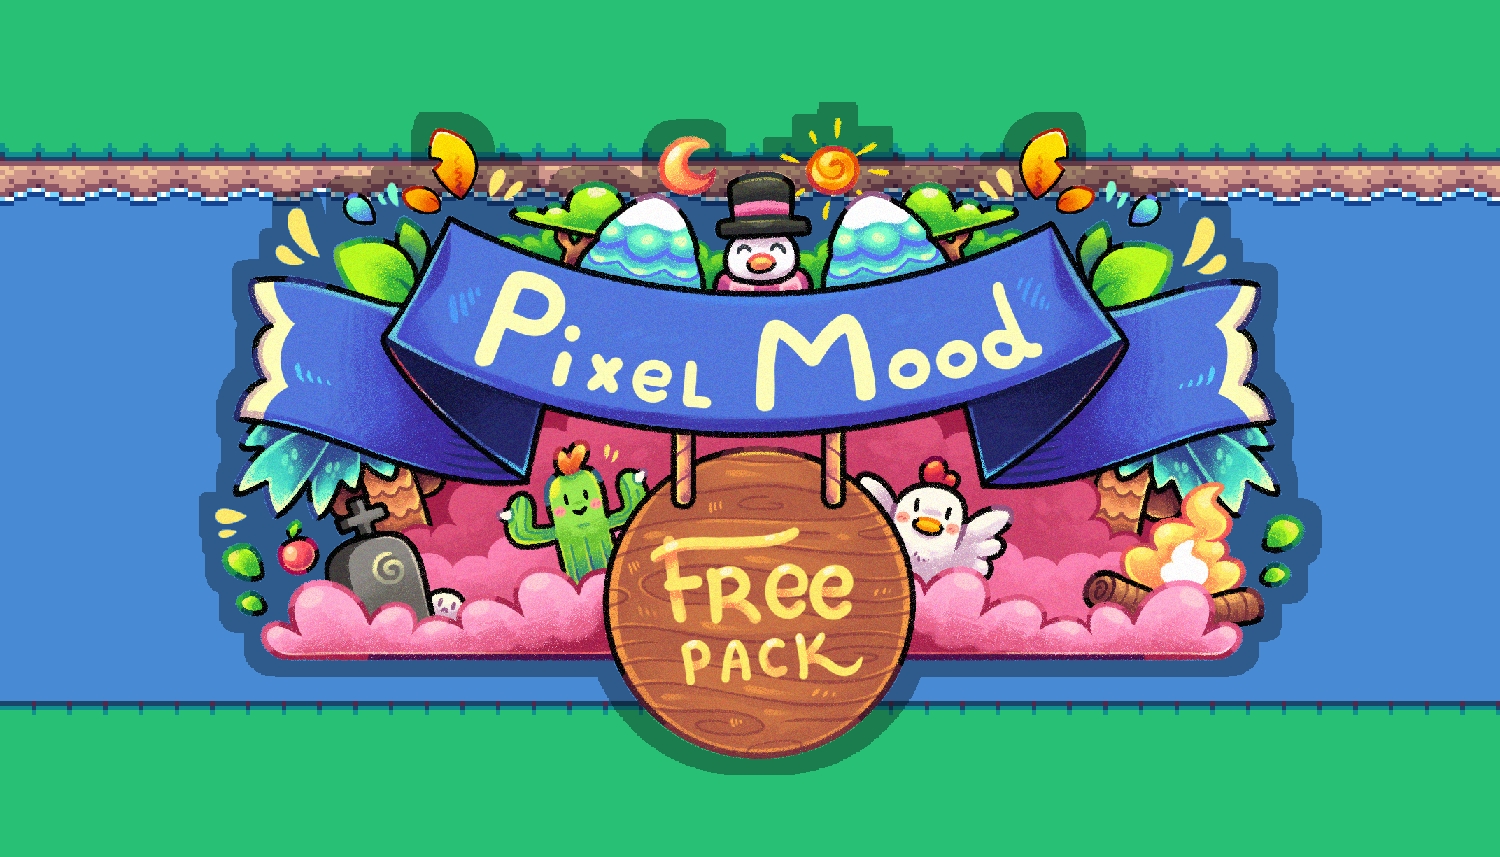 Pixel Mood - Free Pack